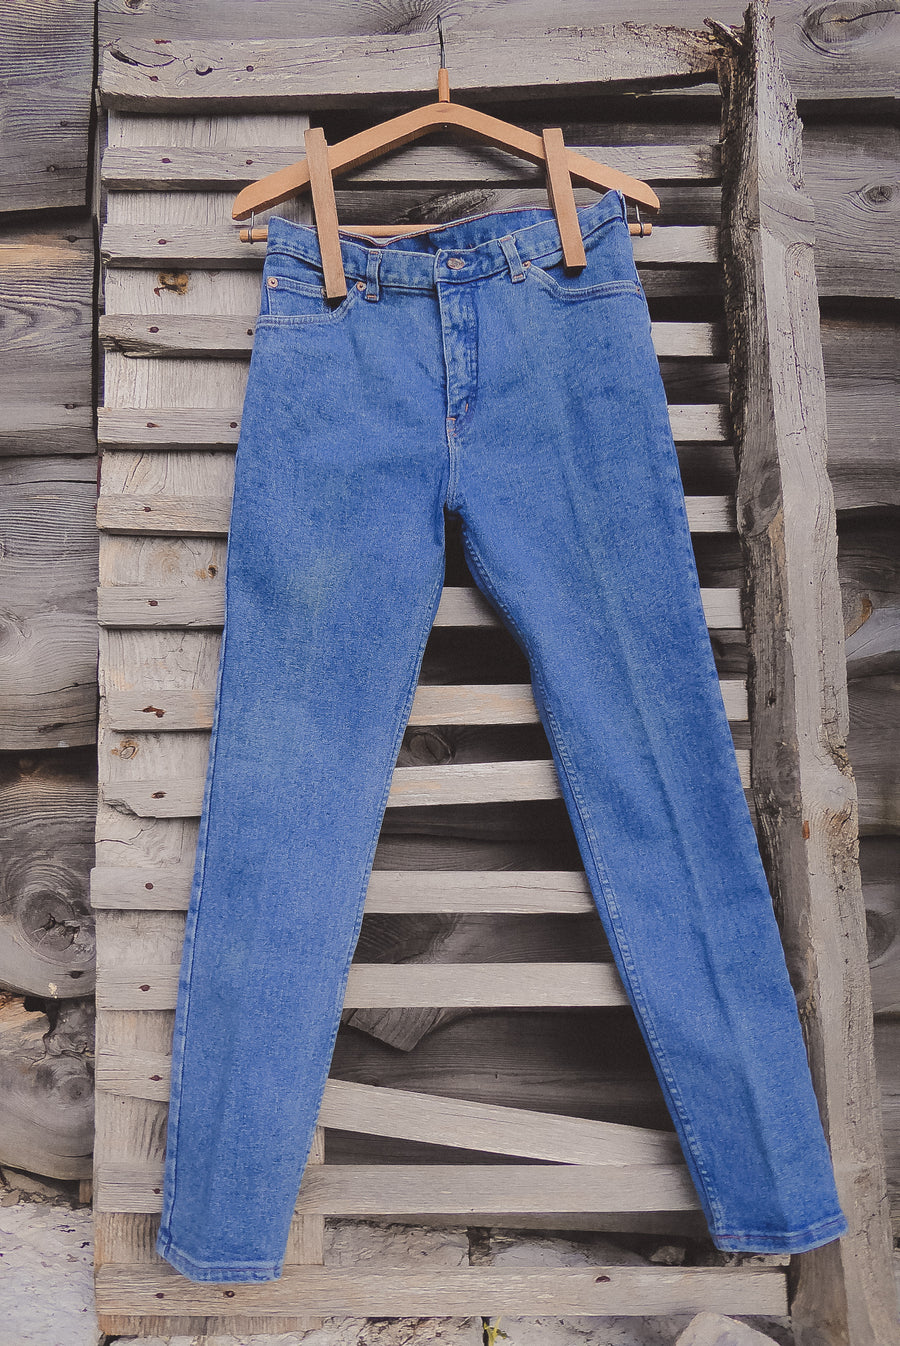 C17 vintage jeans